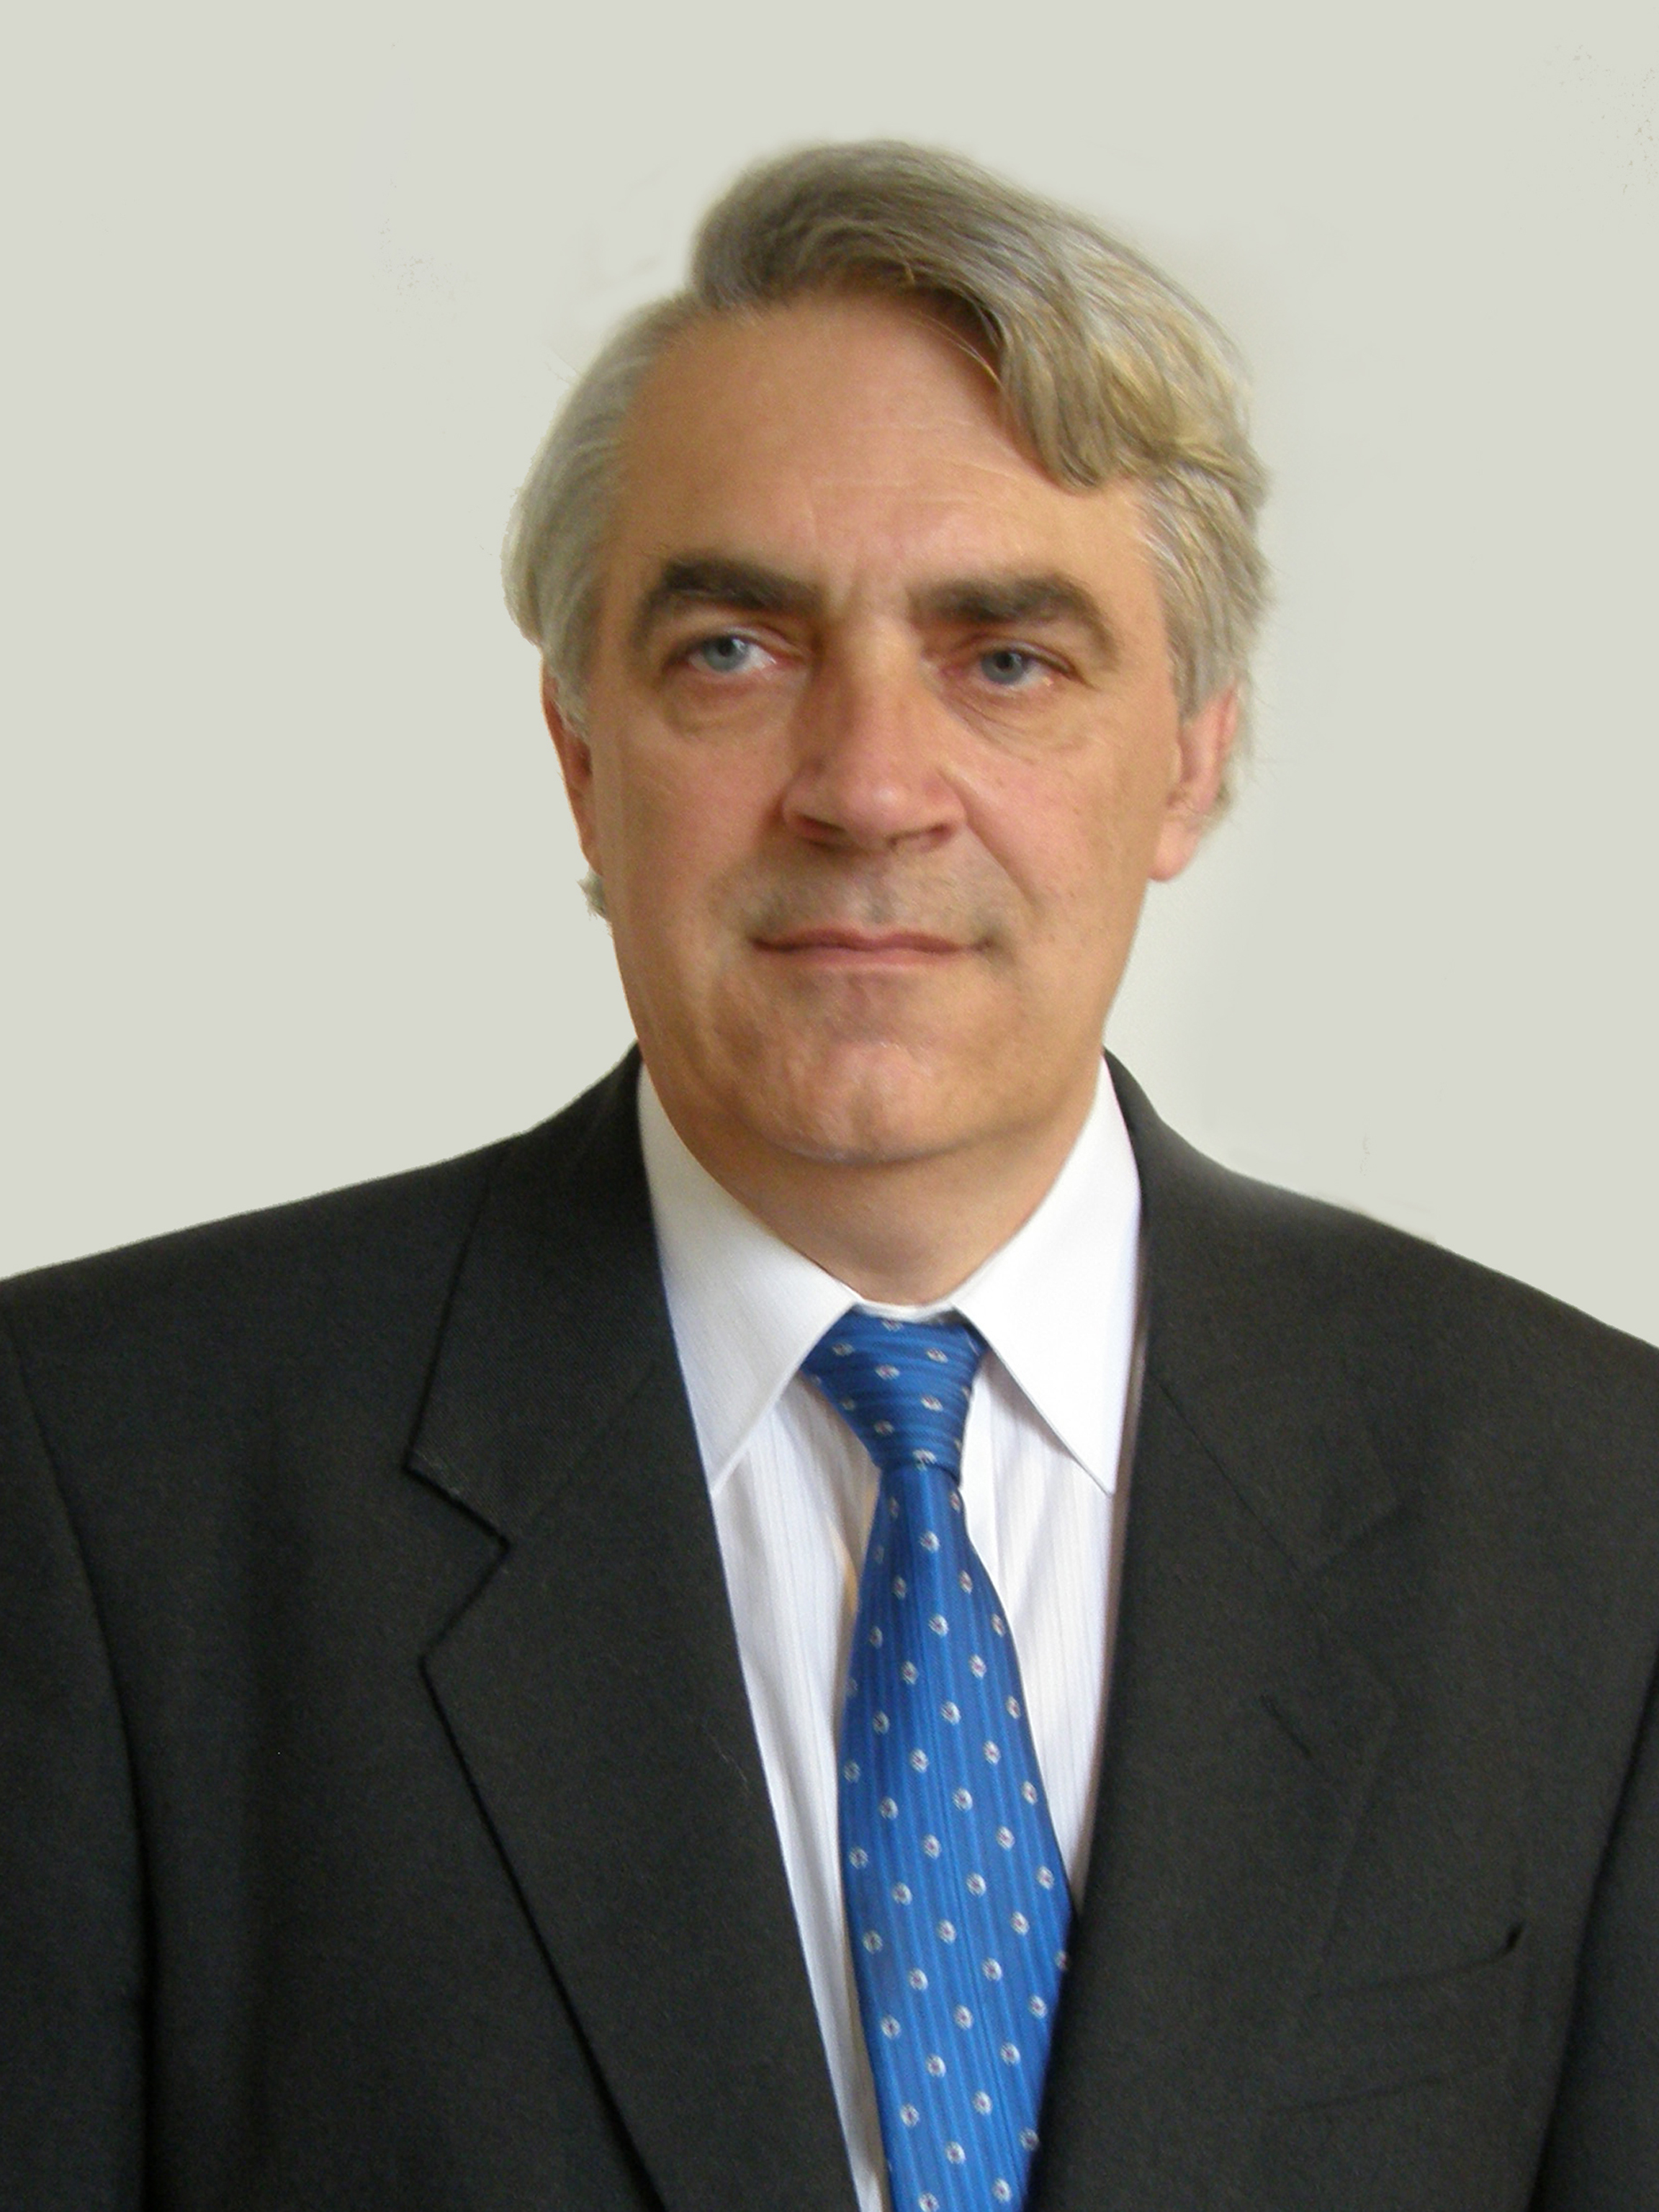 Professor Douglas Macgregor